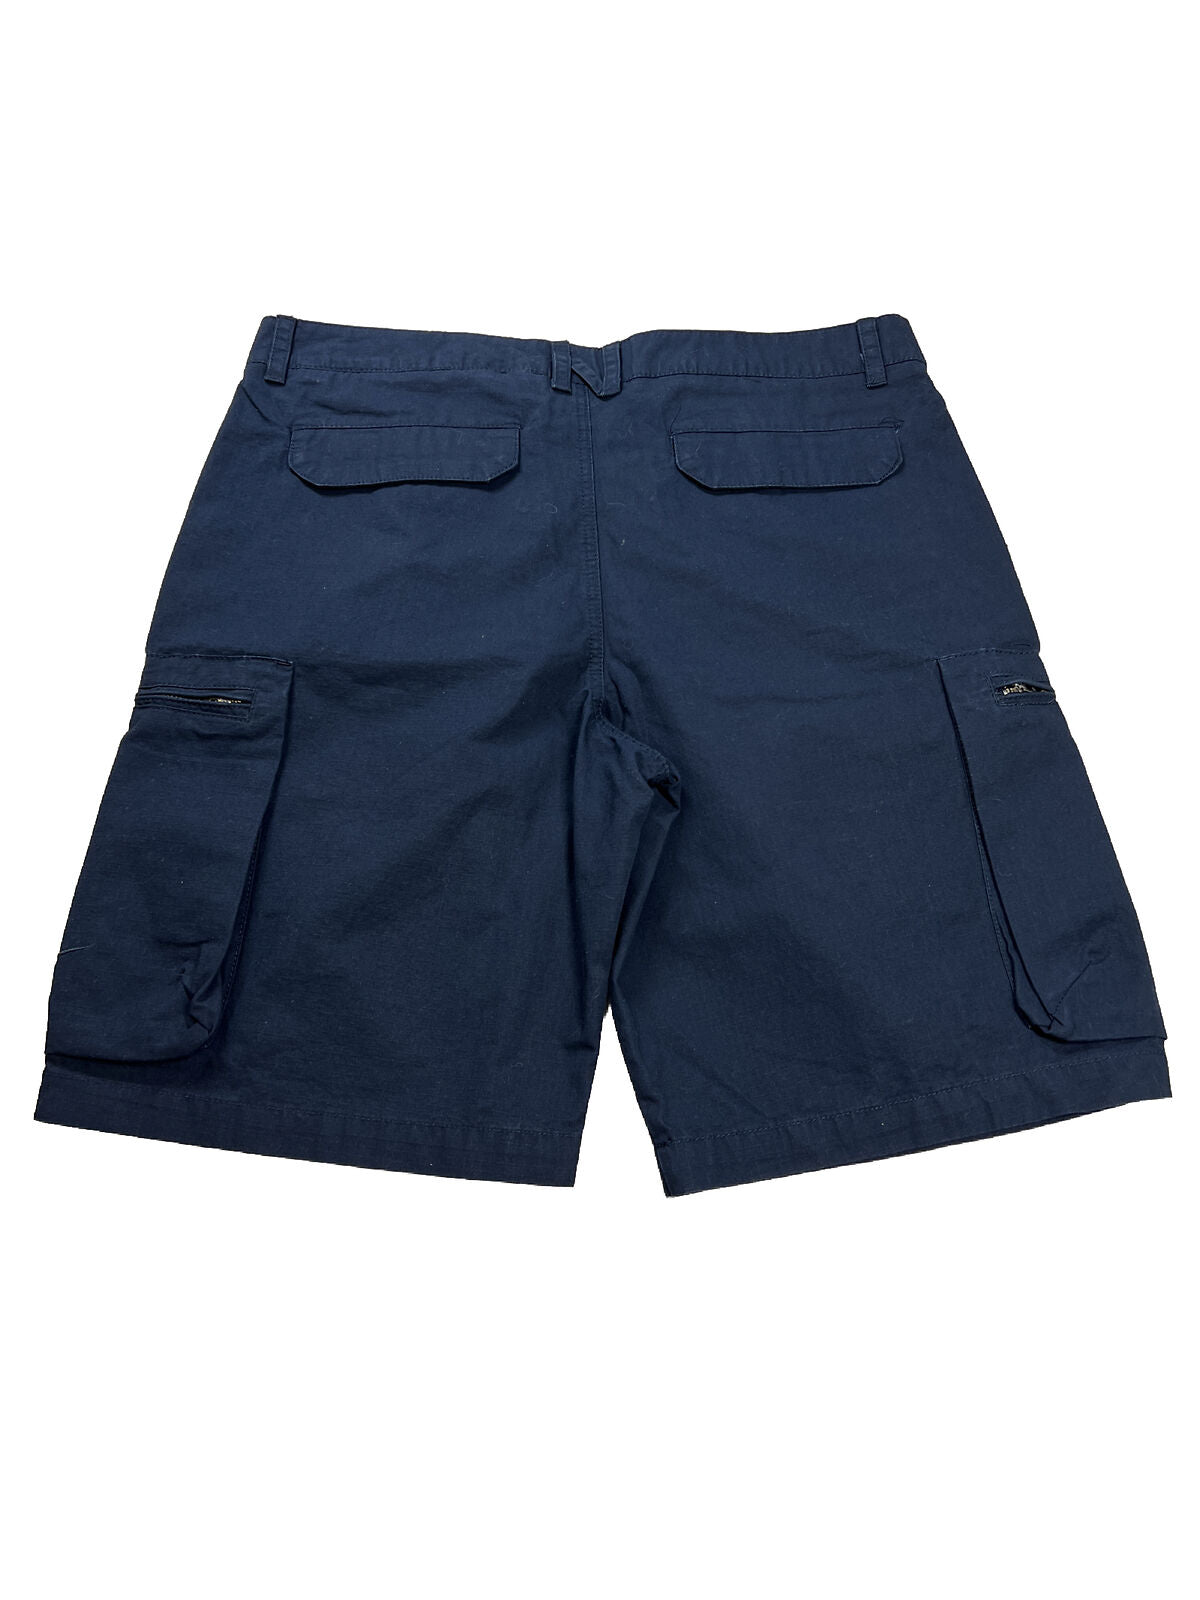 NEW Nike Men's Navy Blue Coven Cotton Cargo Shorts - 34